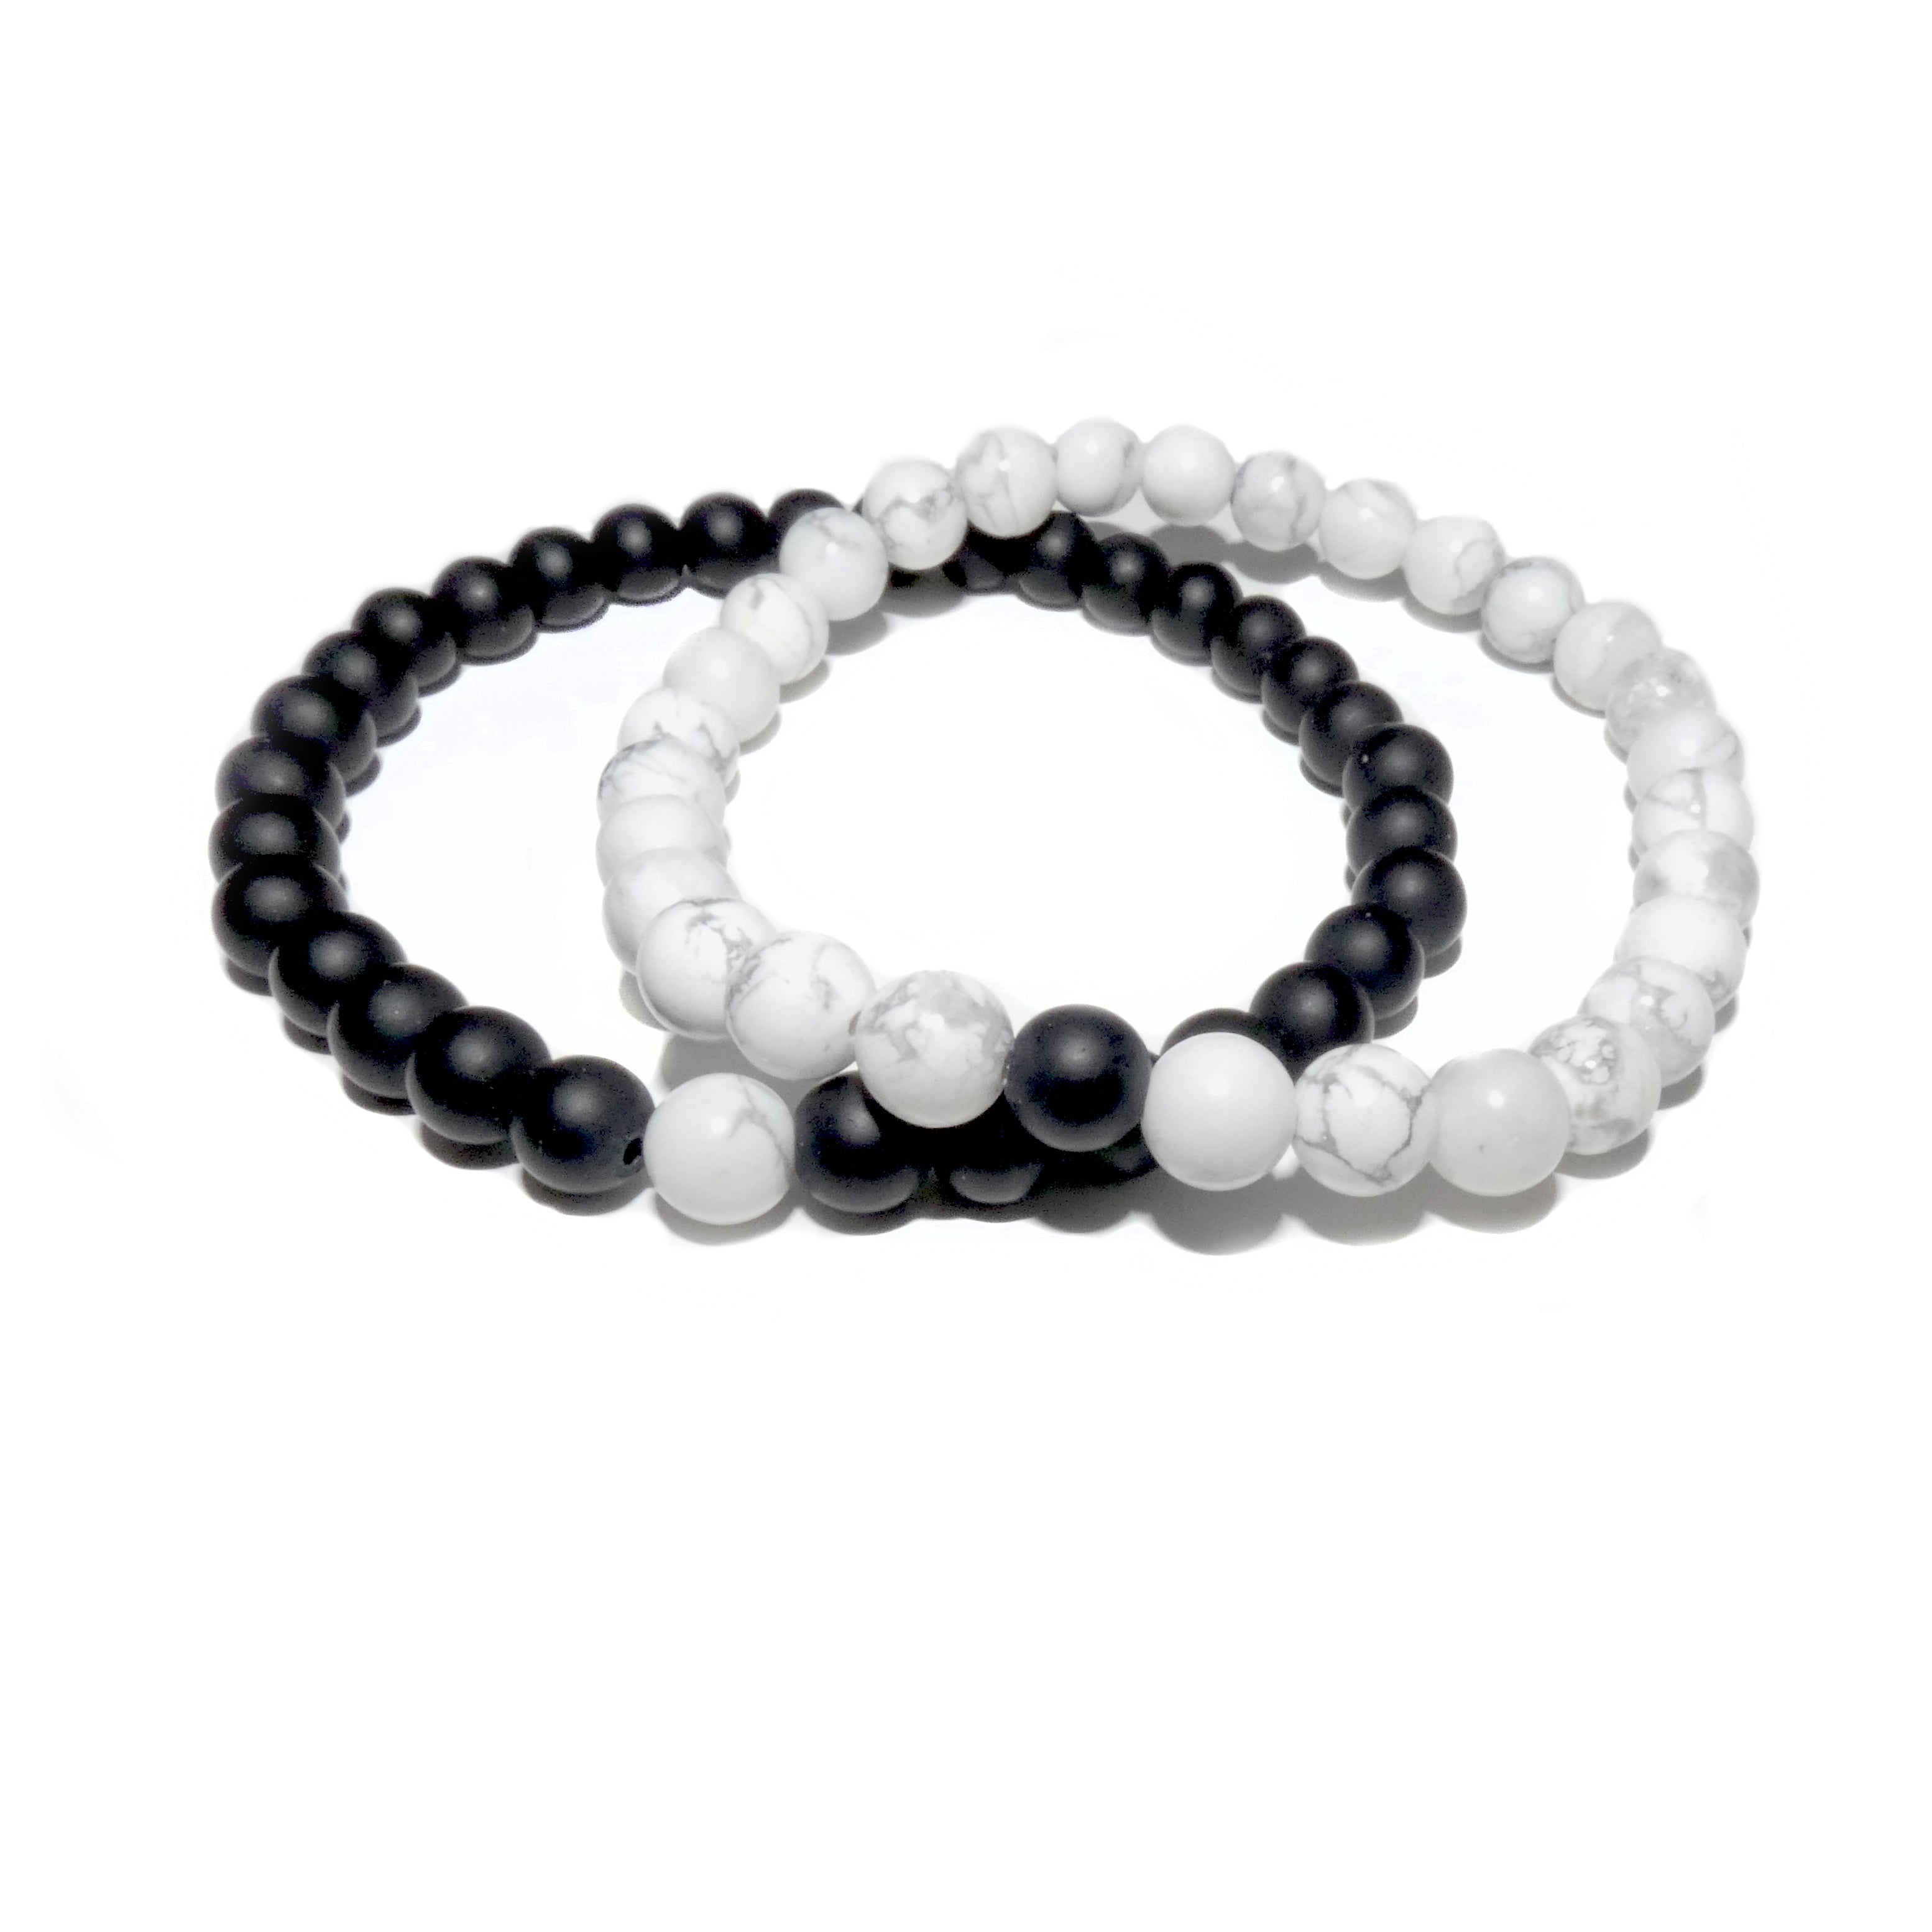 NEW!!! Leaf White Howlite & Black Onyx Empathy Beads